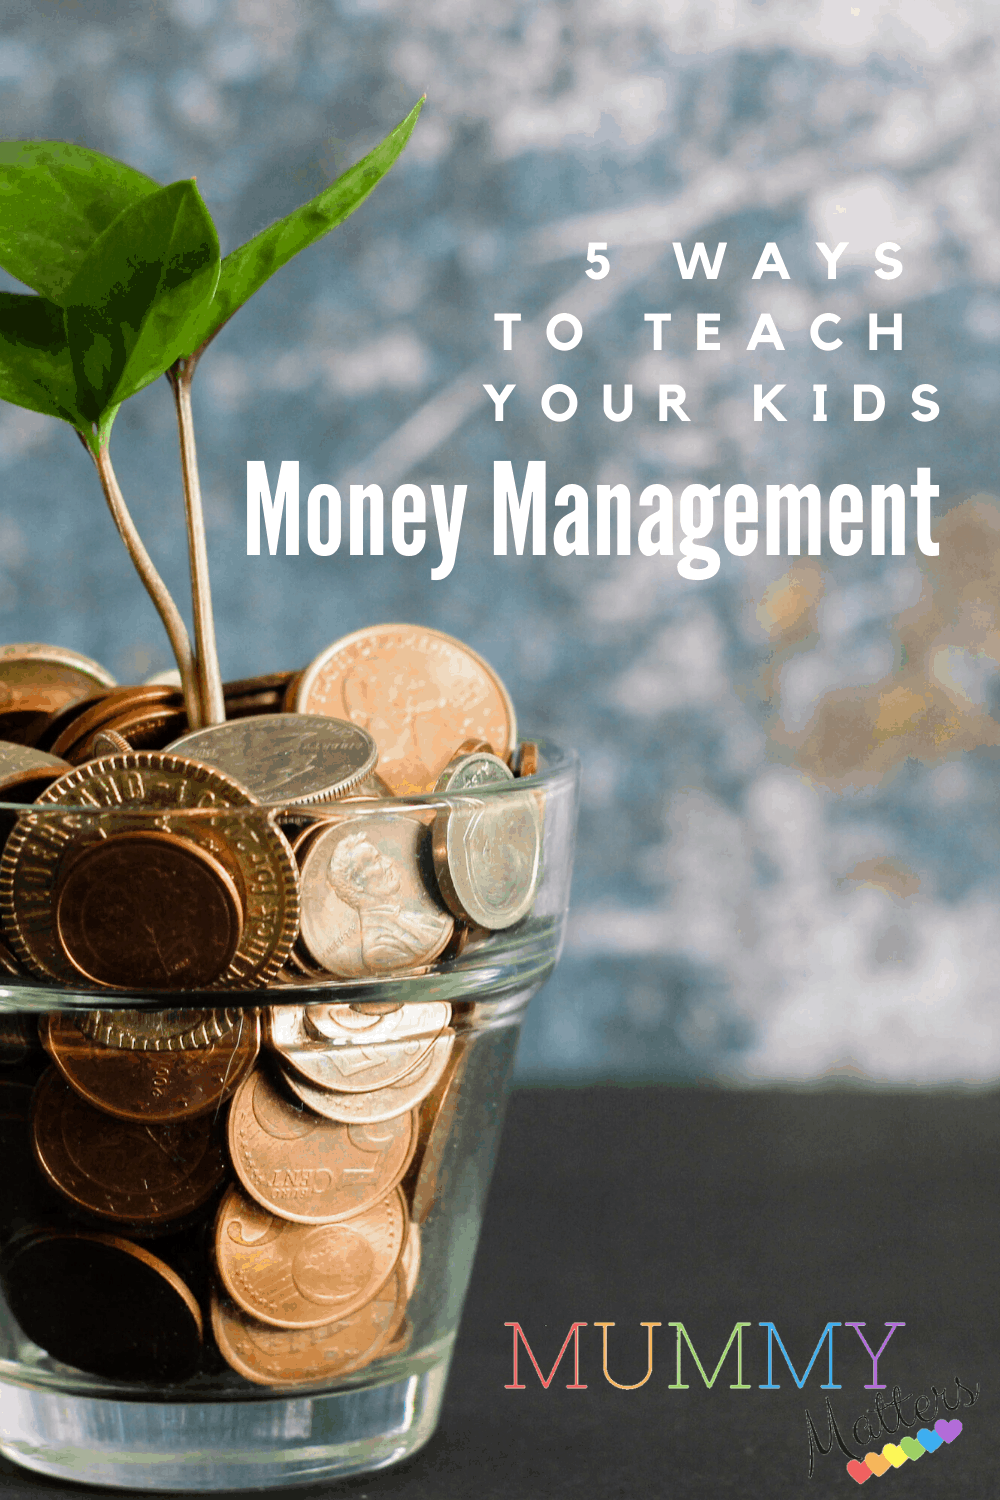 Teach your kids money management